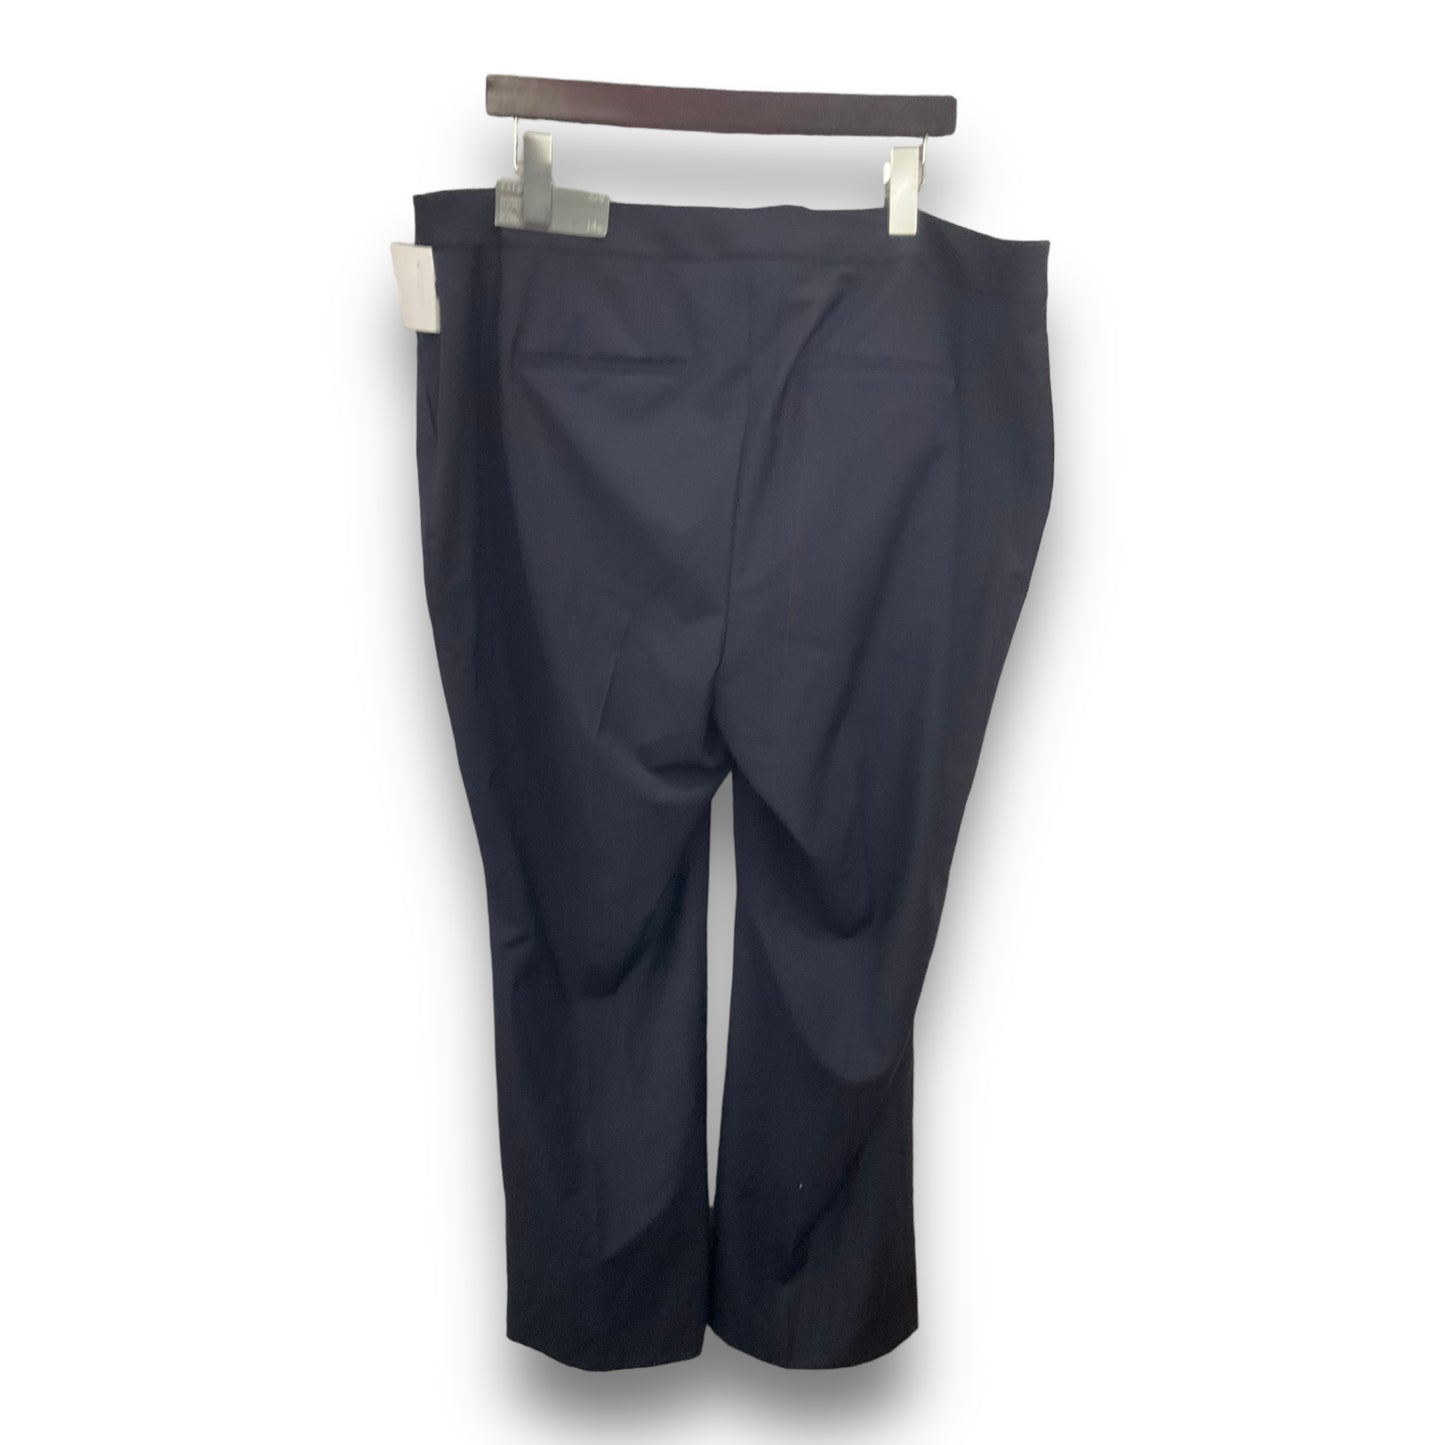 Pants Work/dress By Talbots  Size: 14